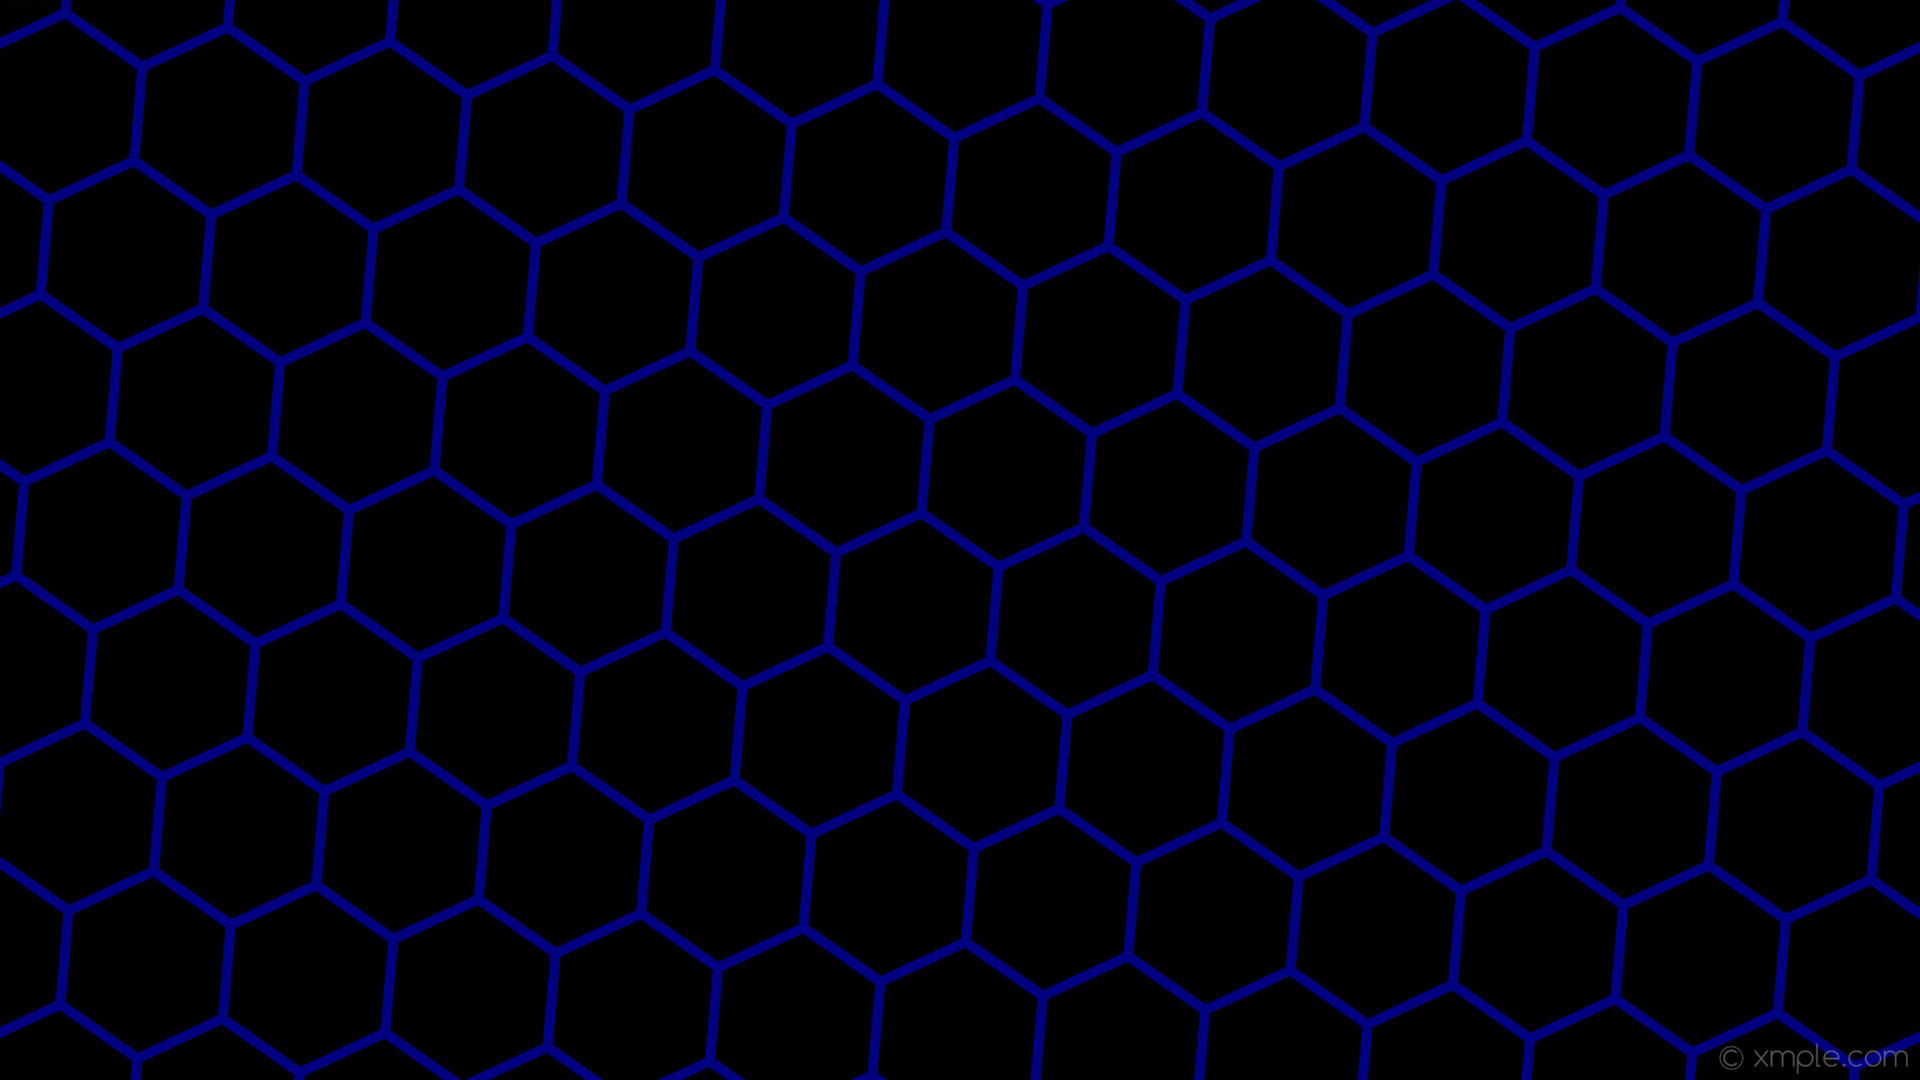 1920x1080 wallpaper beehive blue black hexagon honeycomb navy #000000 #000080  diagonal 55Â° 10px 163px